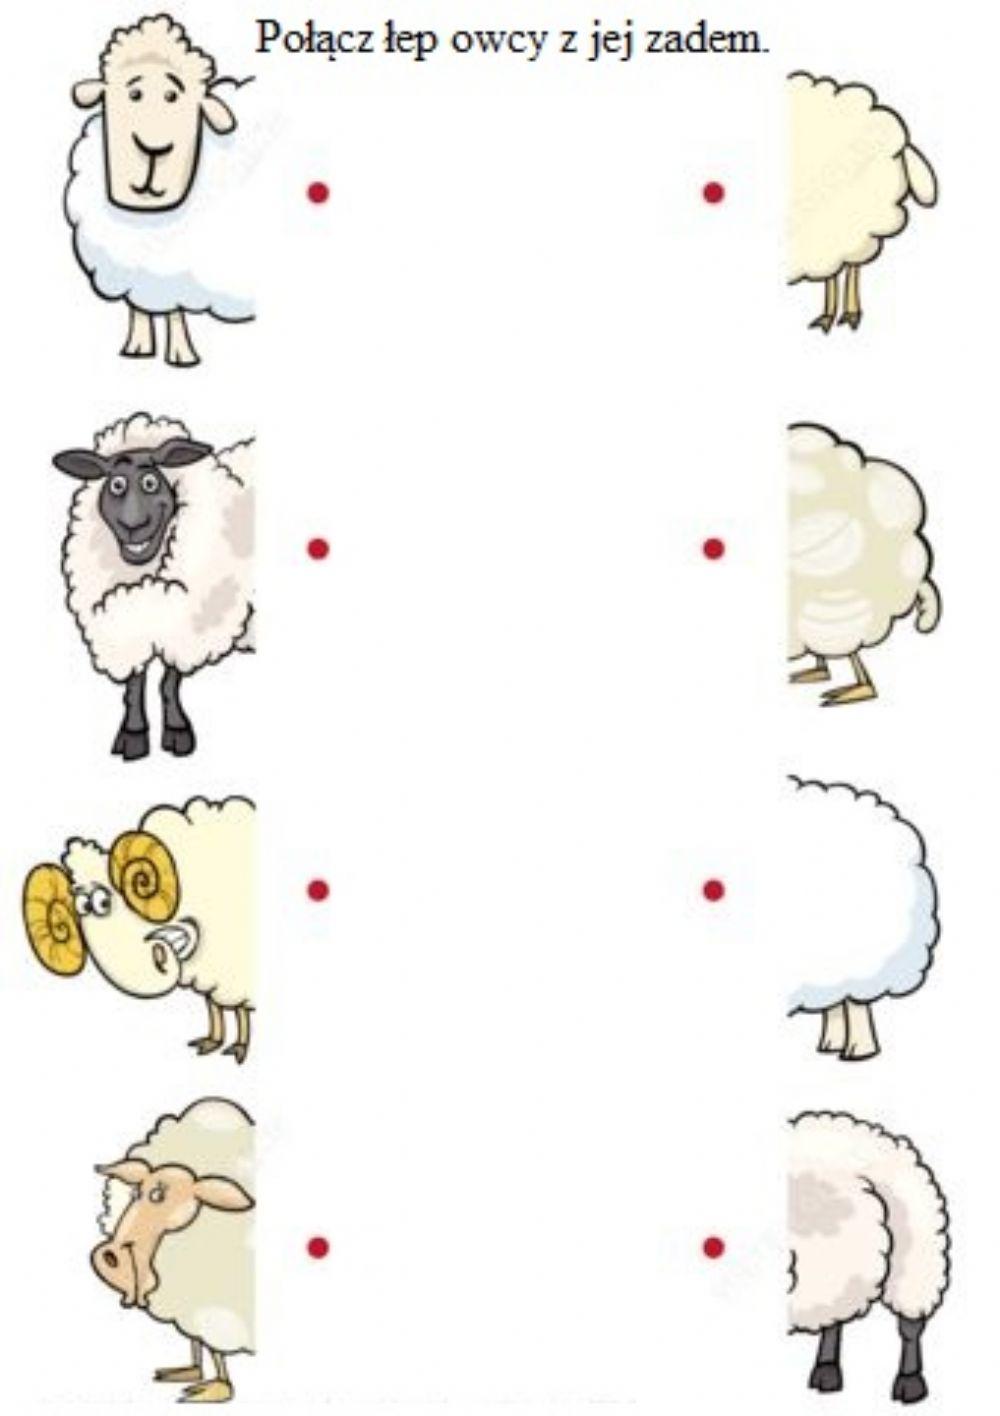 Takie same owce